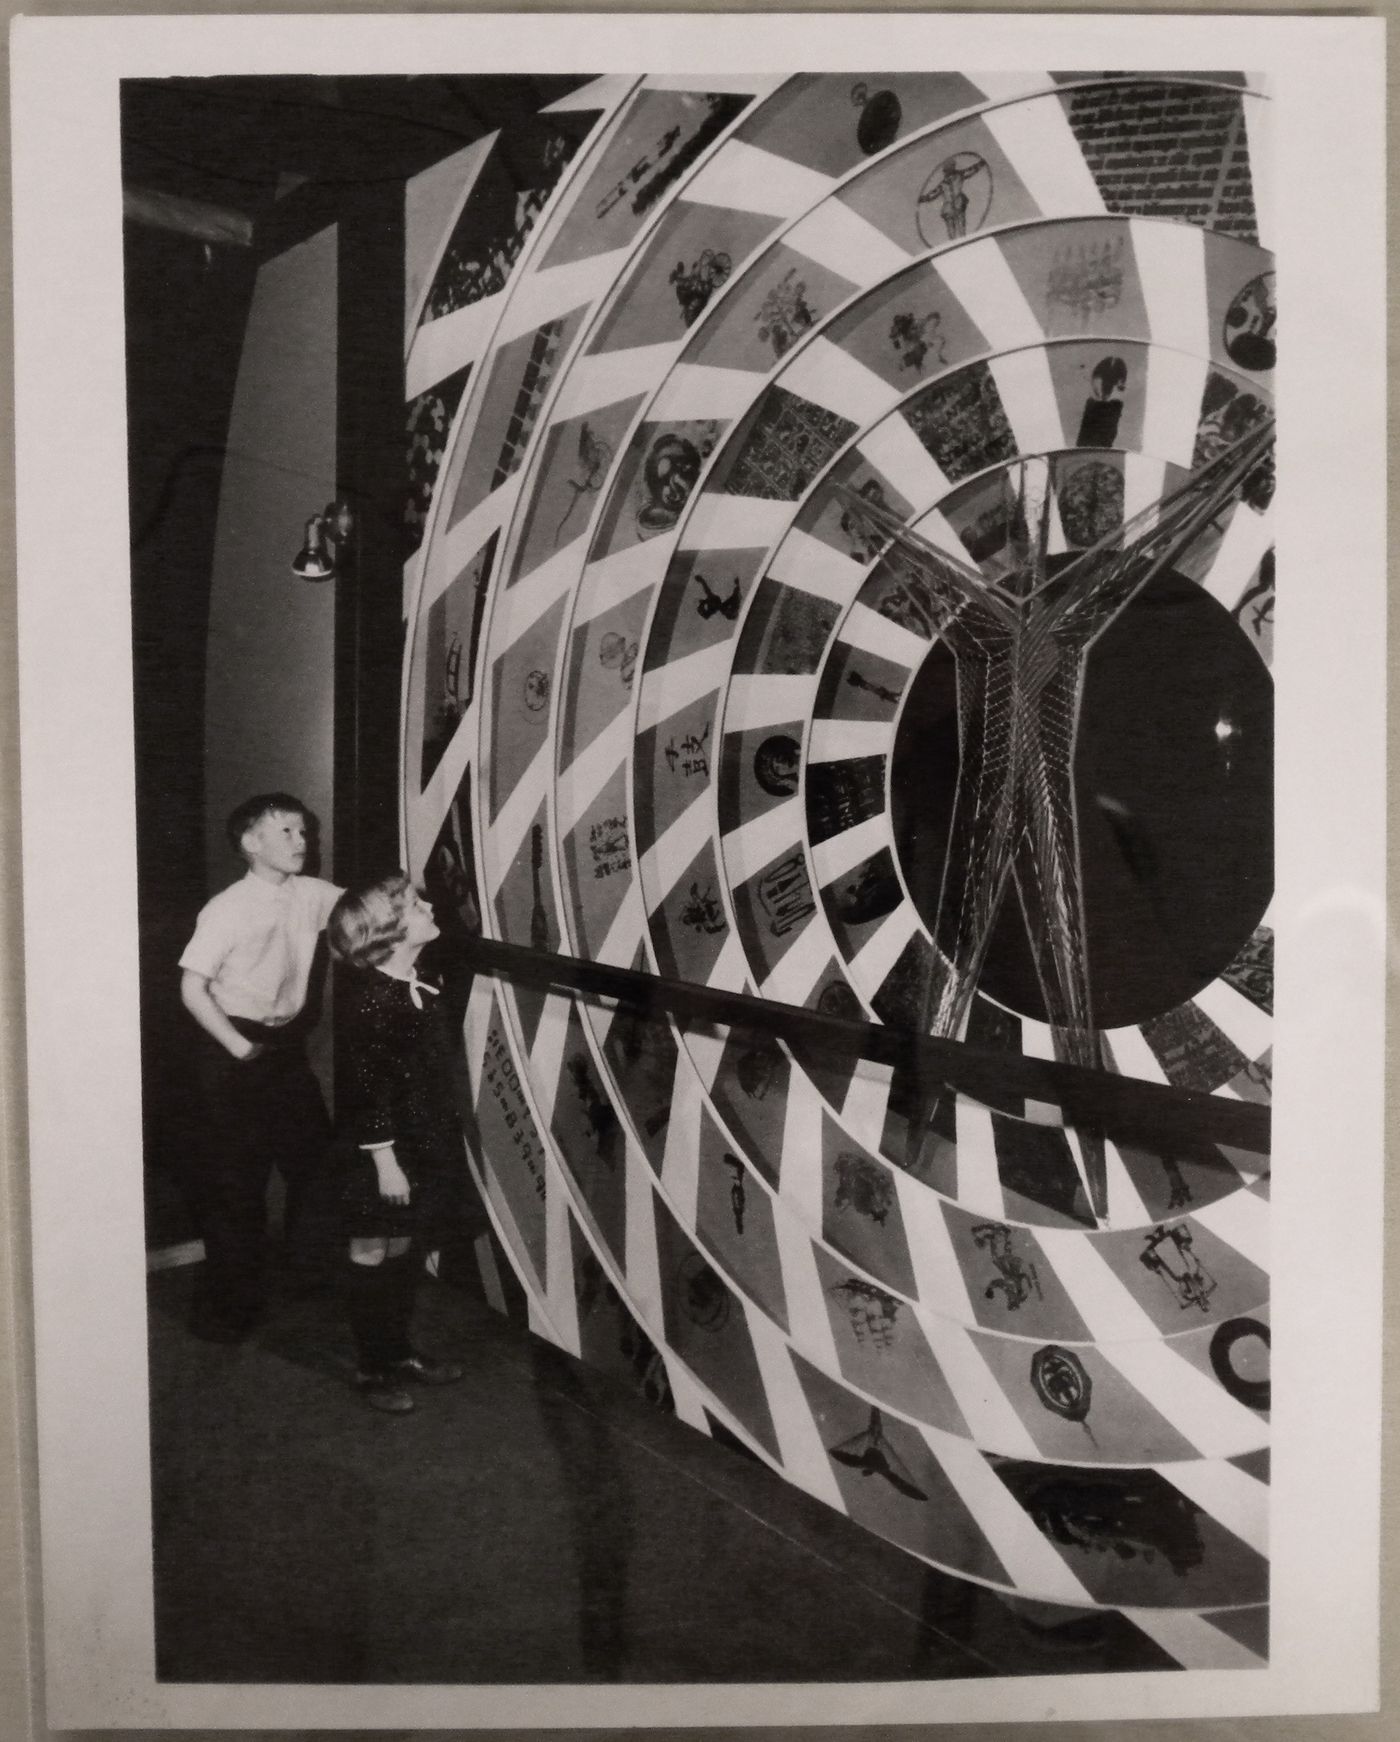 View of children looking at an unidentified artwork, Expo 67, Montréal, Québec